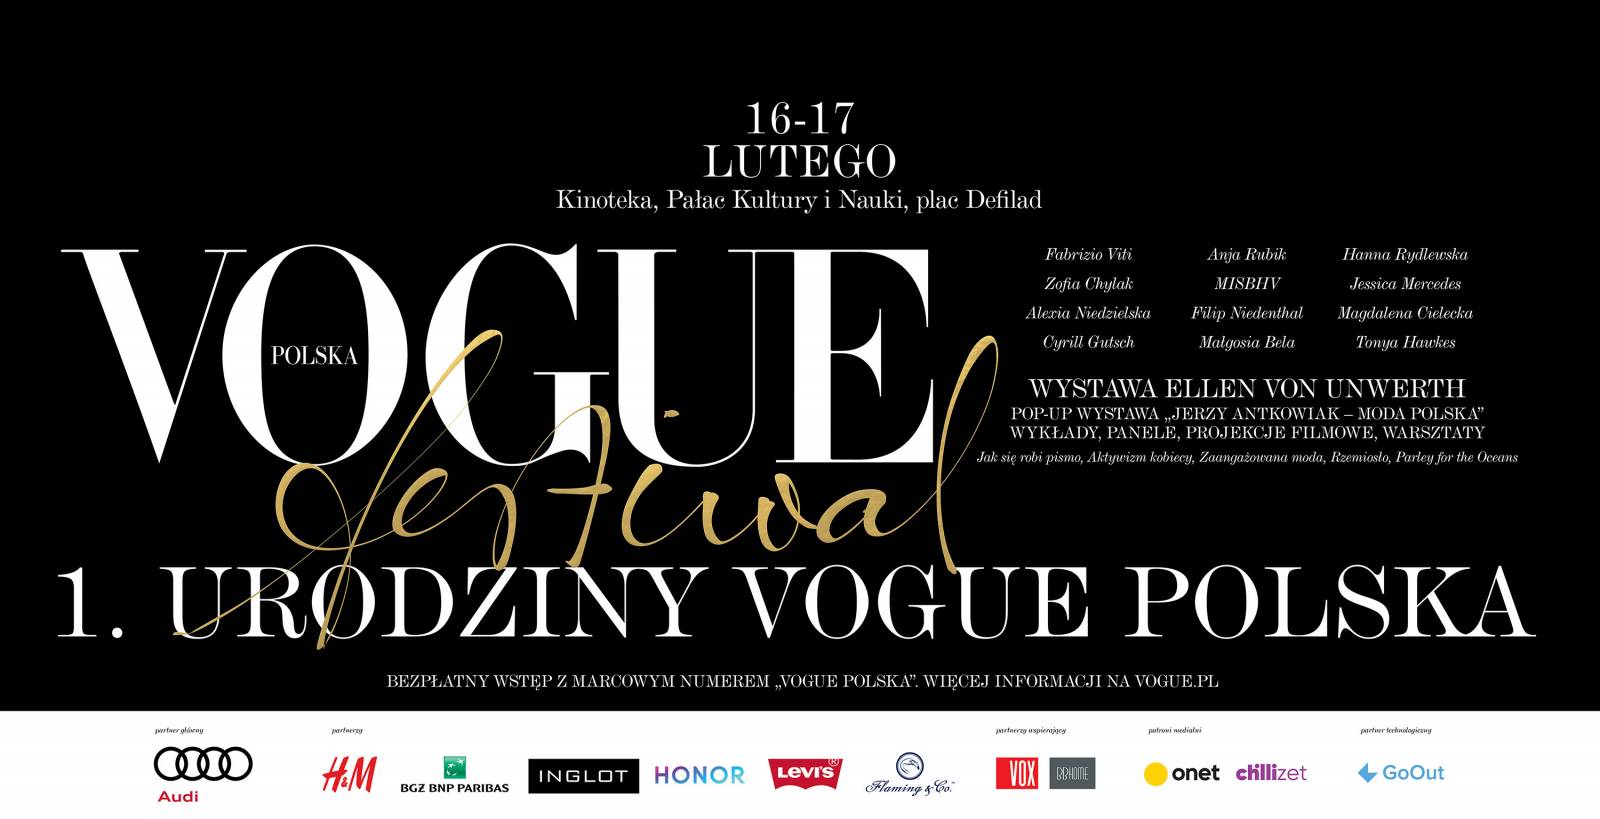 Vogue Polska Festiwal